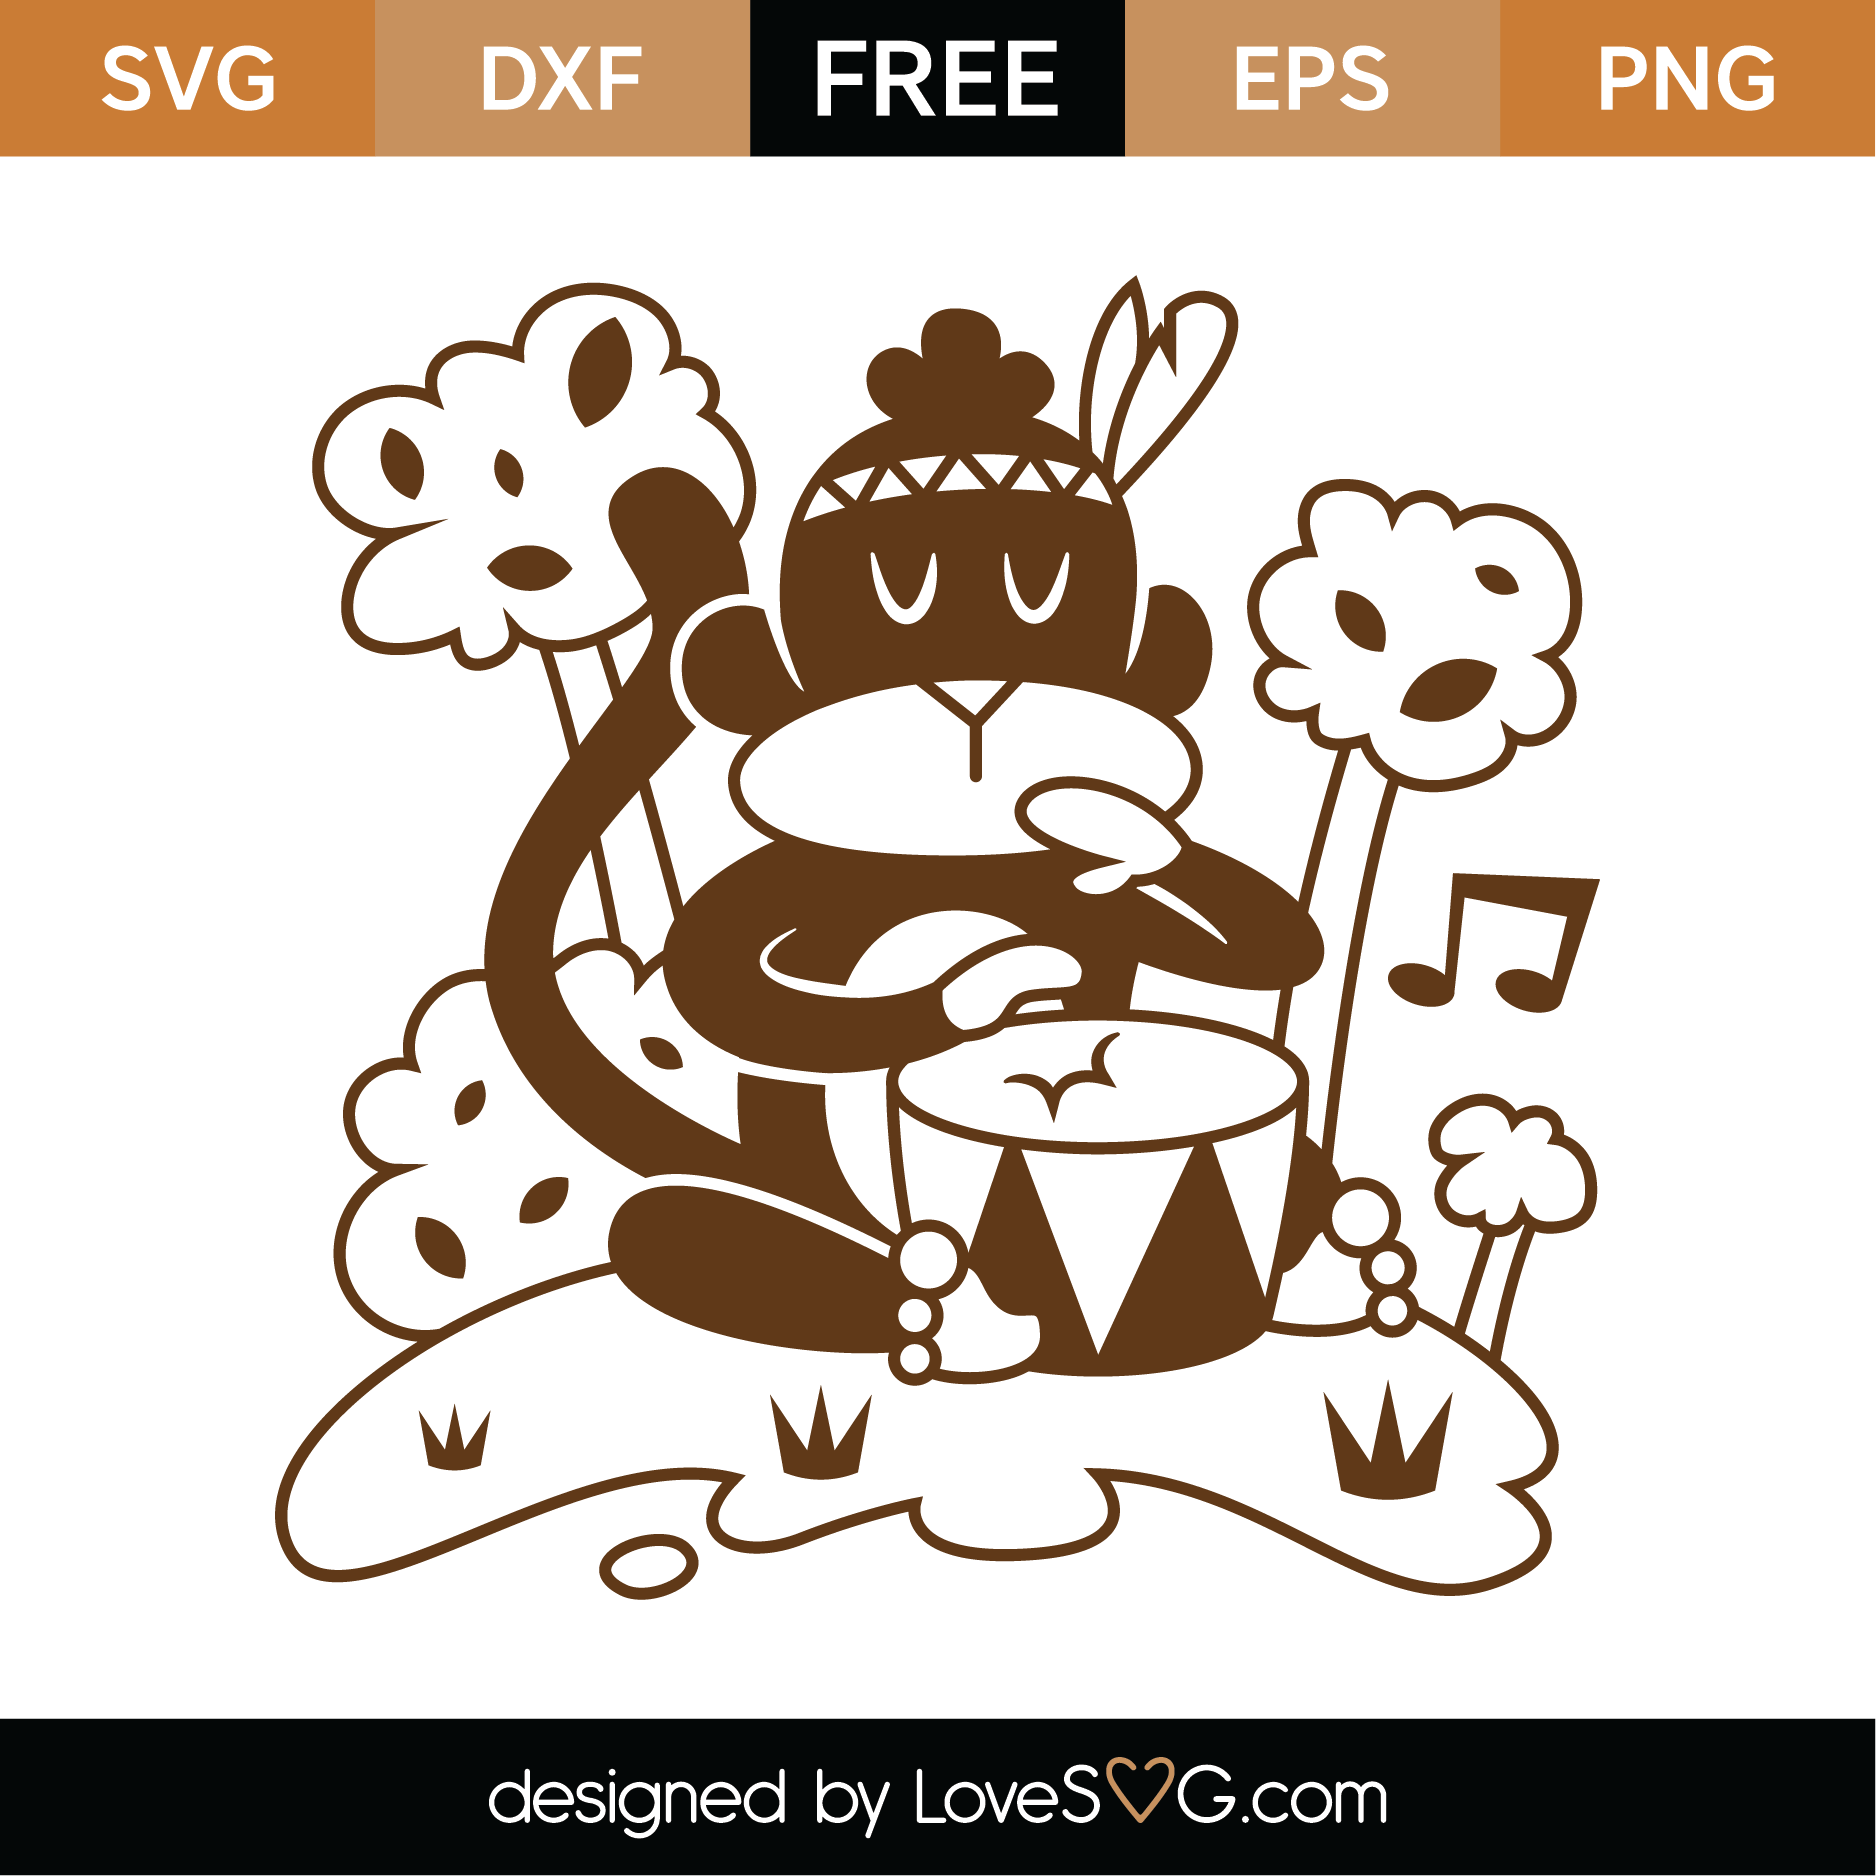 Download Free Whimsical Monkey SVG Cut File | Lovesvg.com